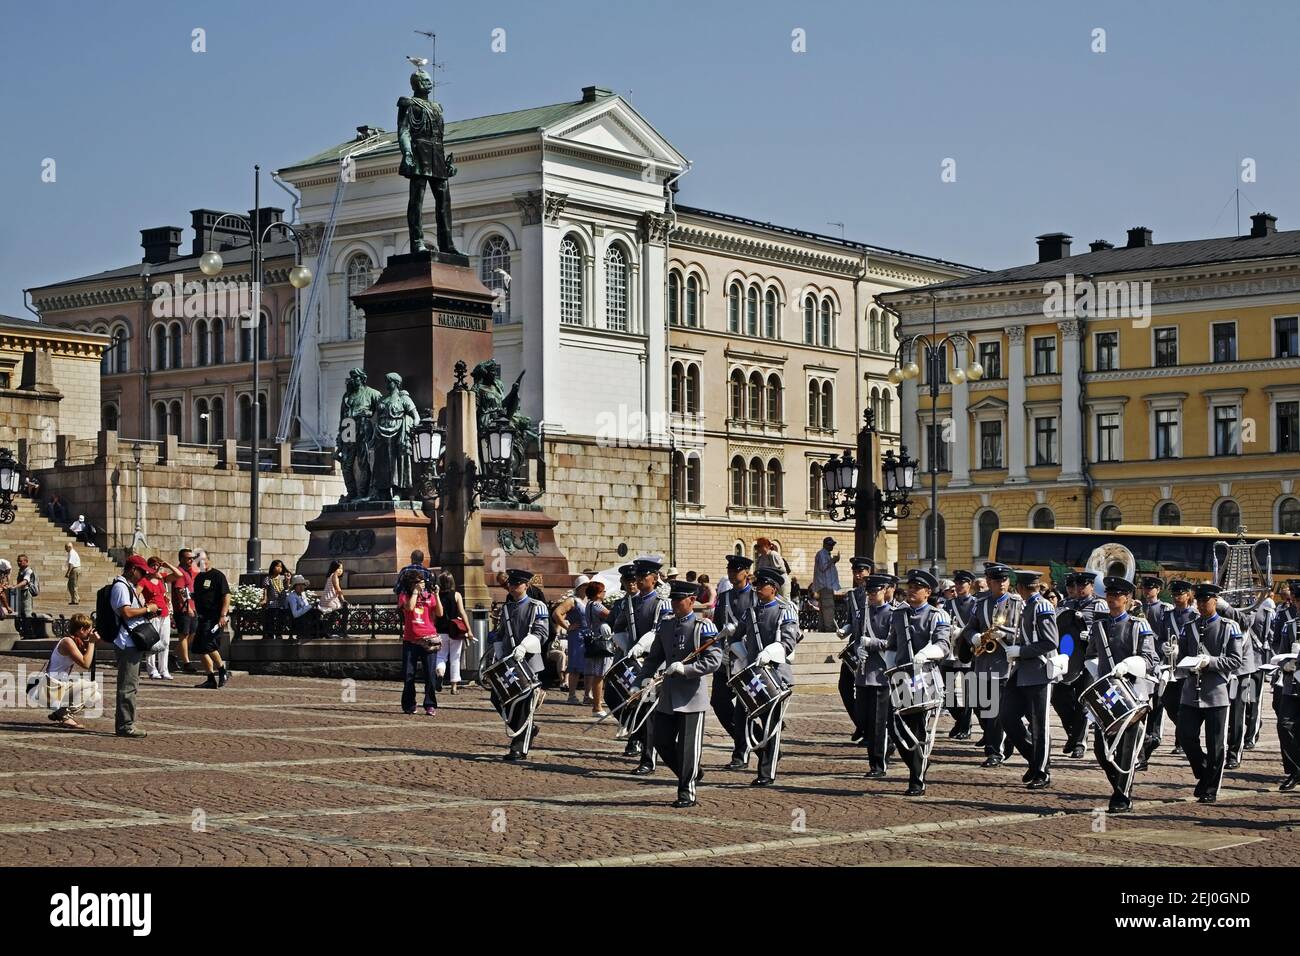 Military orchestra on Senate square in Helsinki. Finland Stock Photo